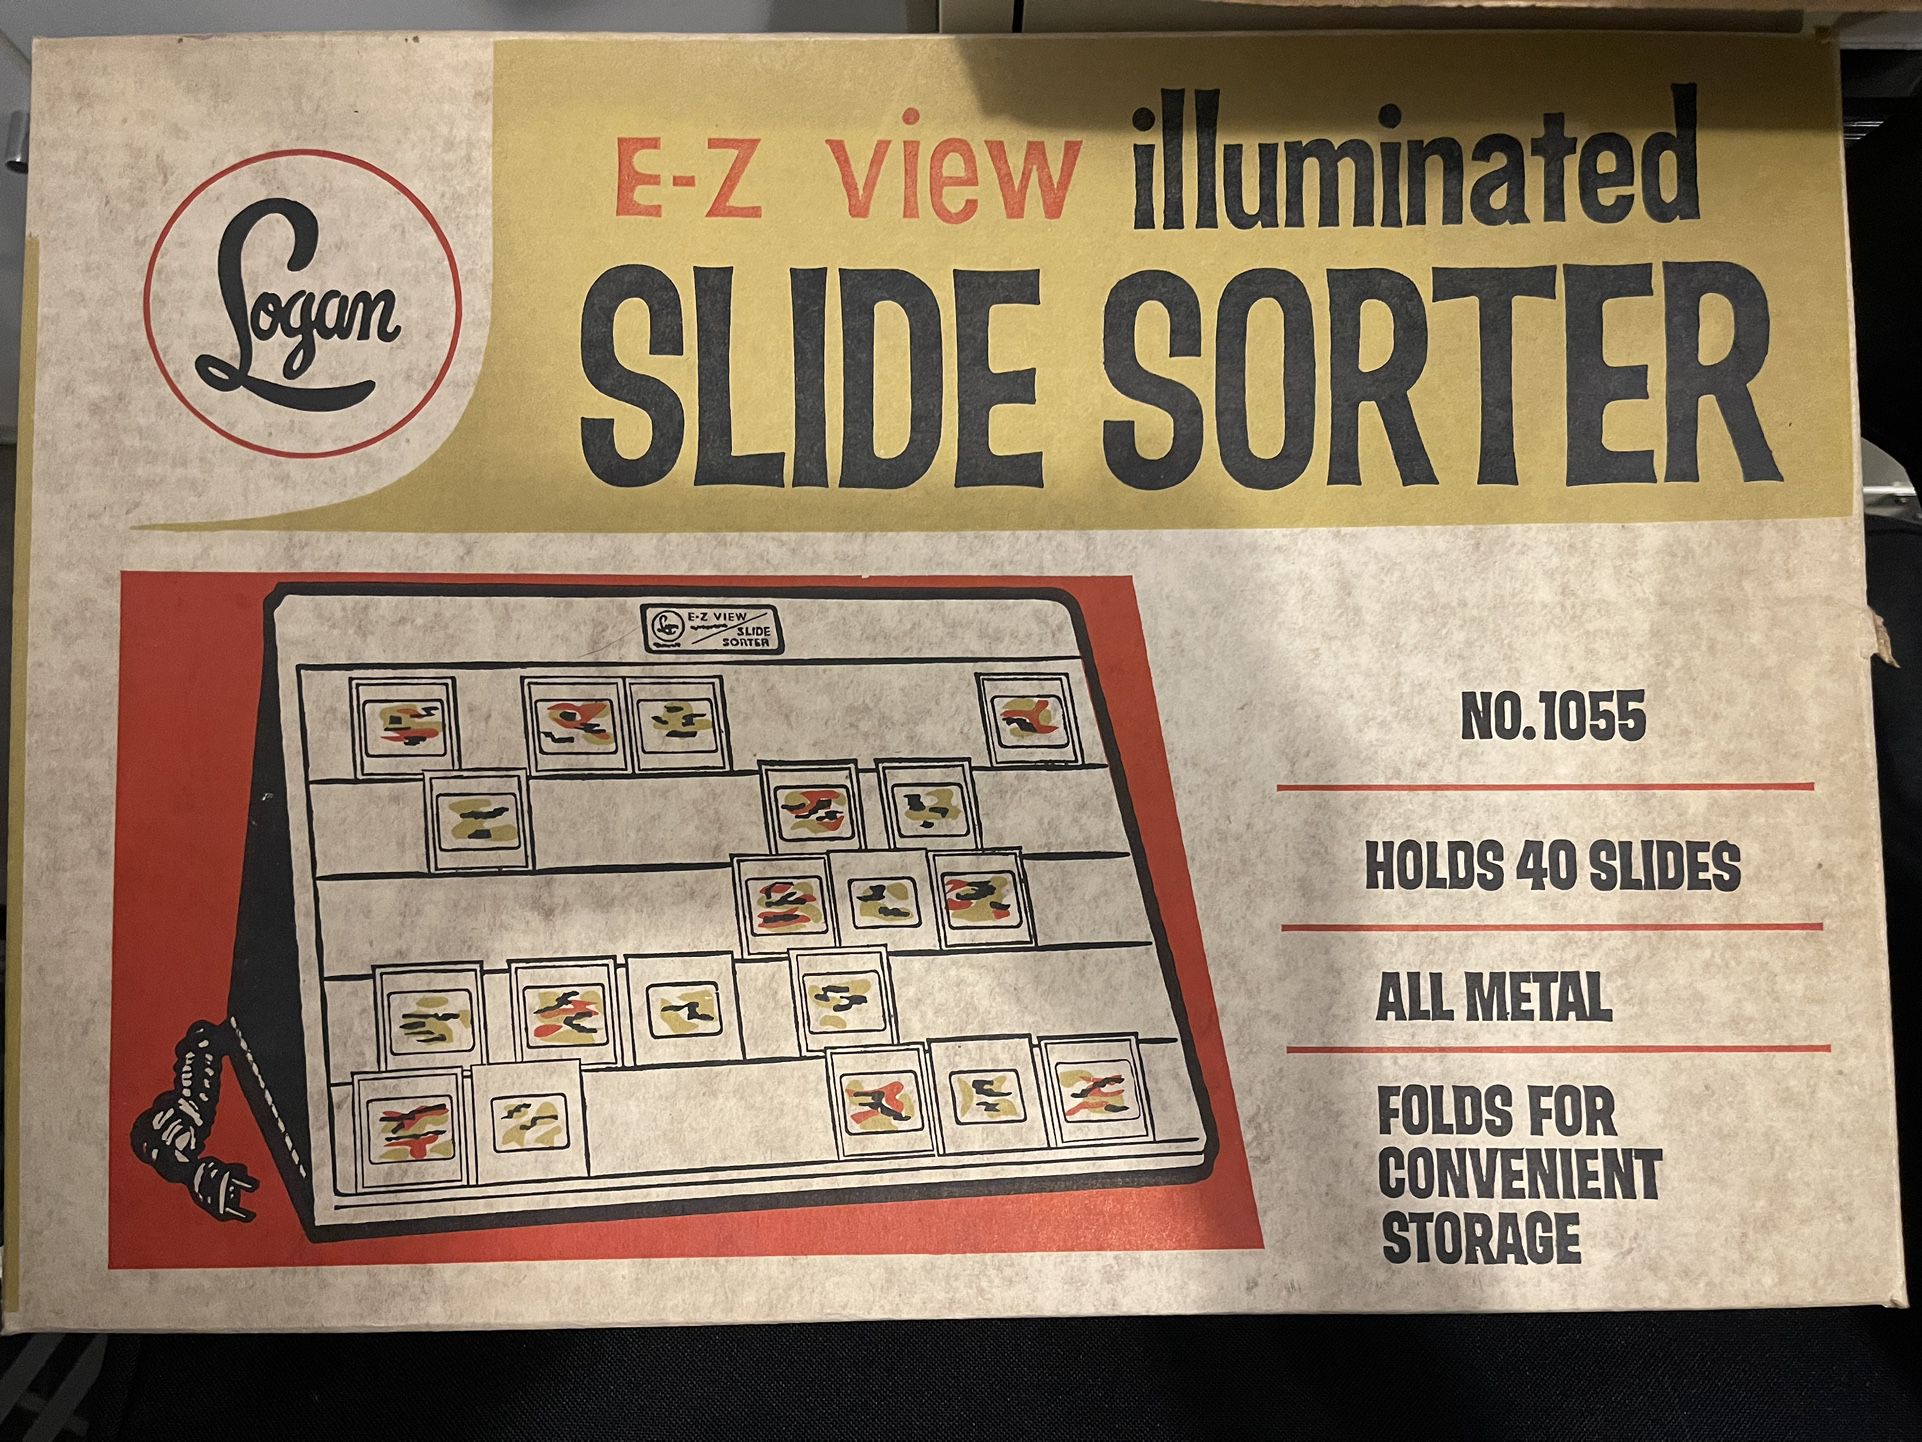 E-Z View Illuminated Slide Sorter